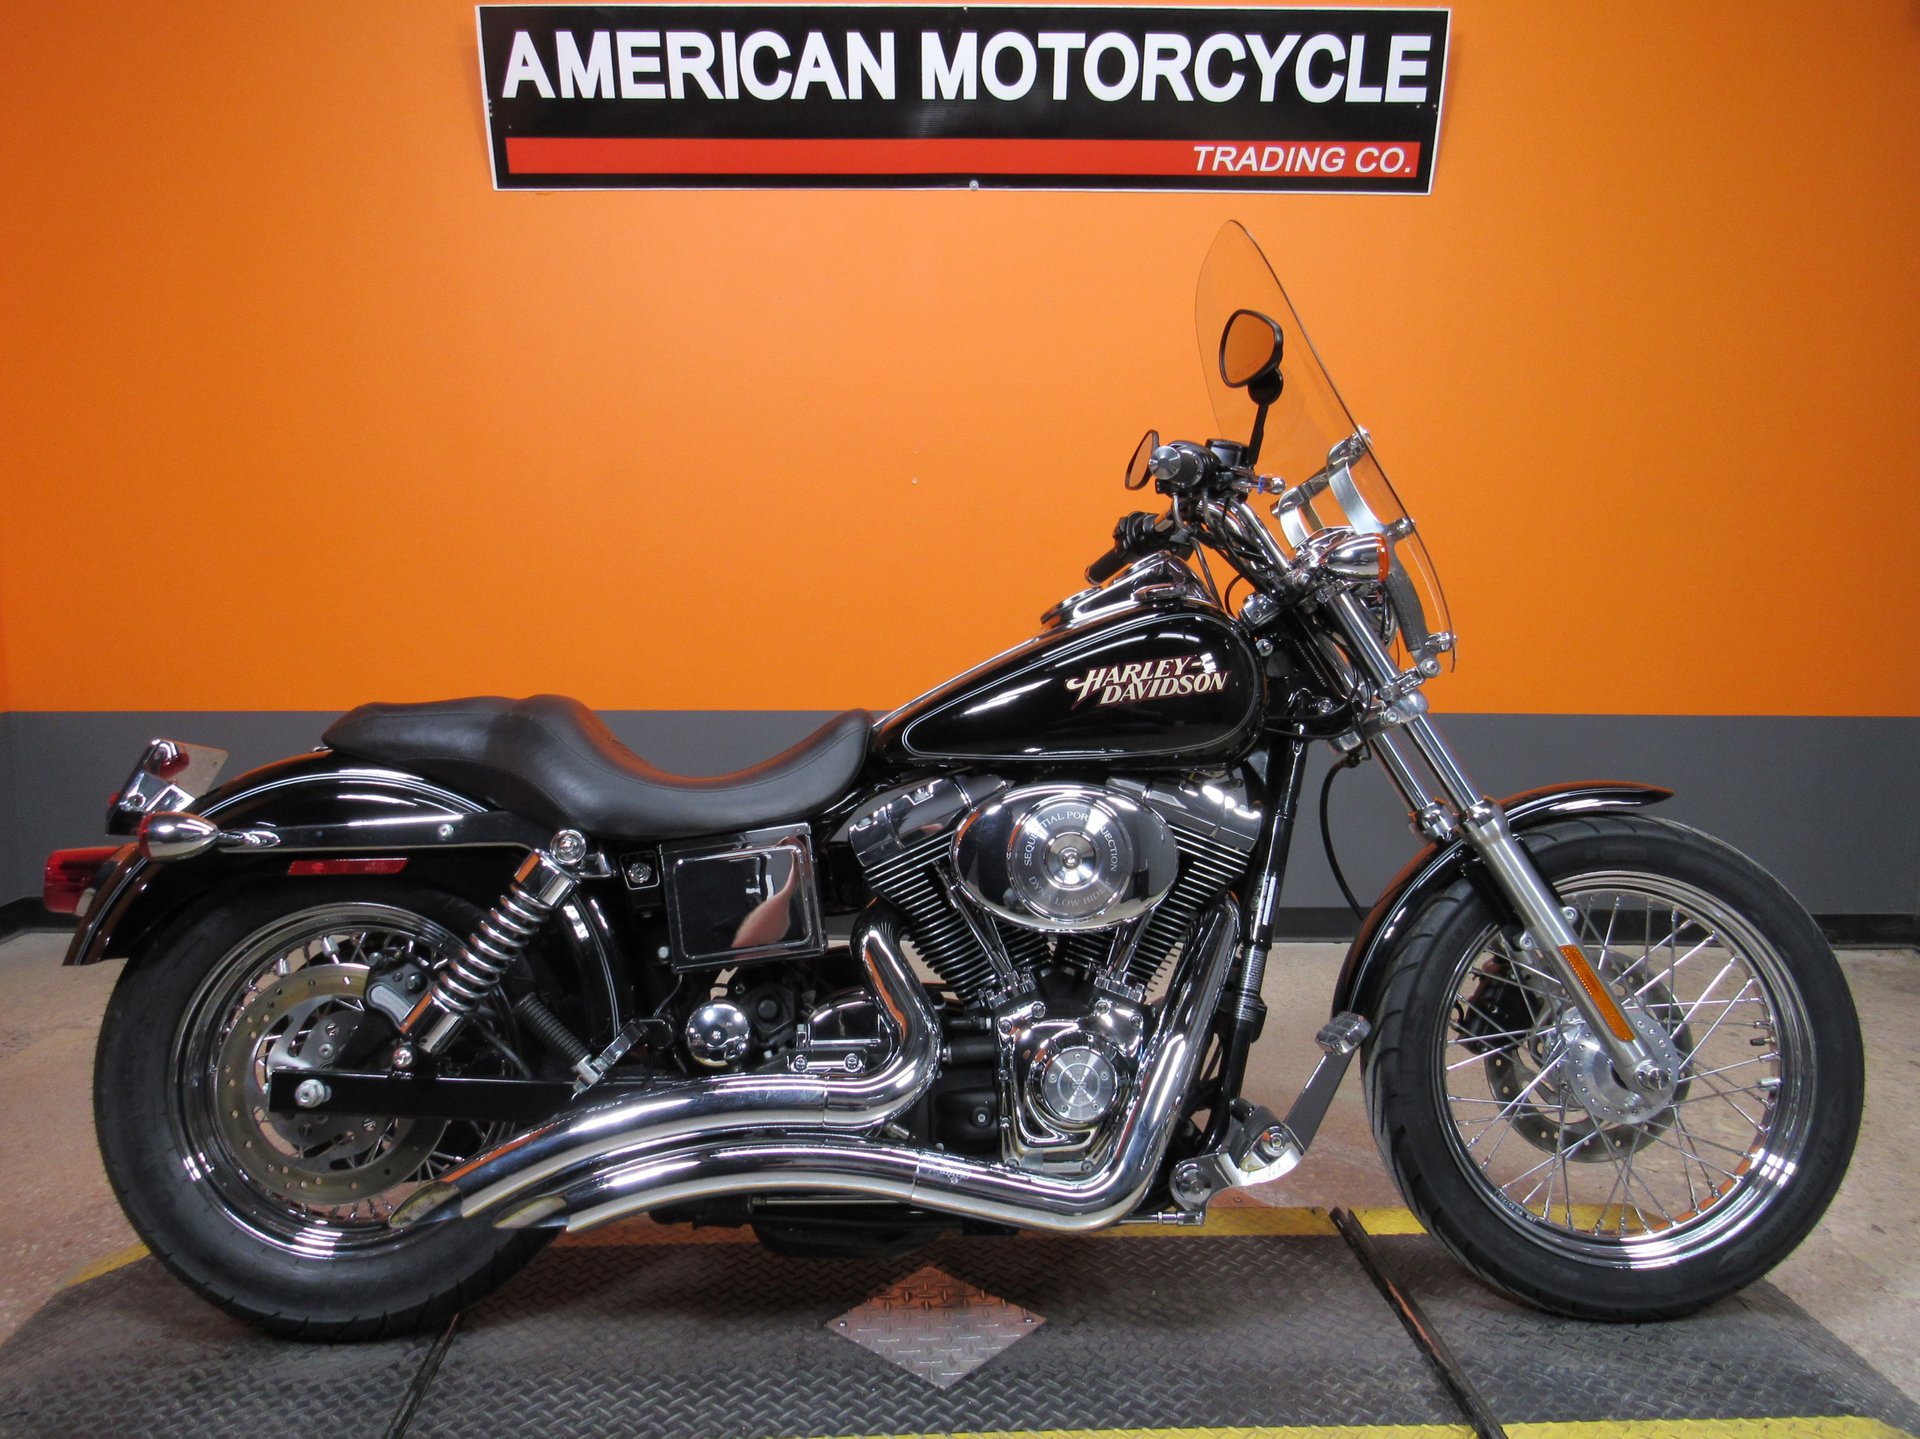 2005 Harley Davidson Dyna Low Rider American Motorcycle Trading Company Used Harley Davidson Motorcycles